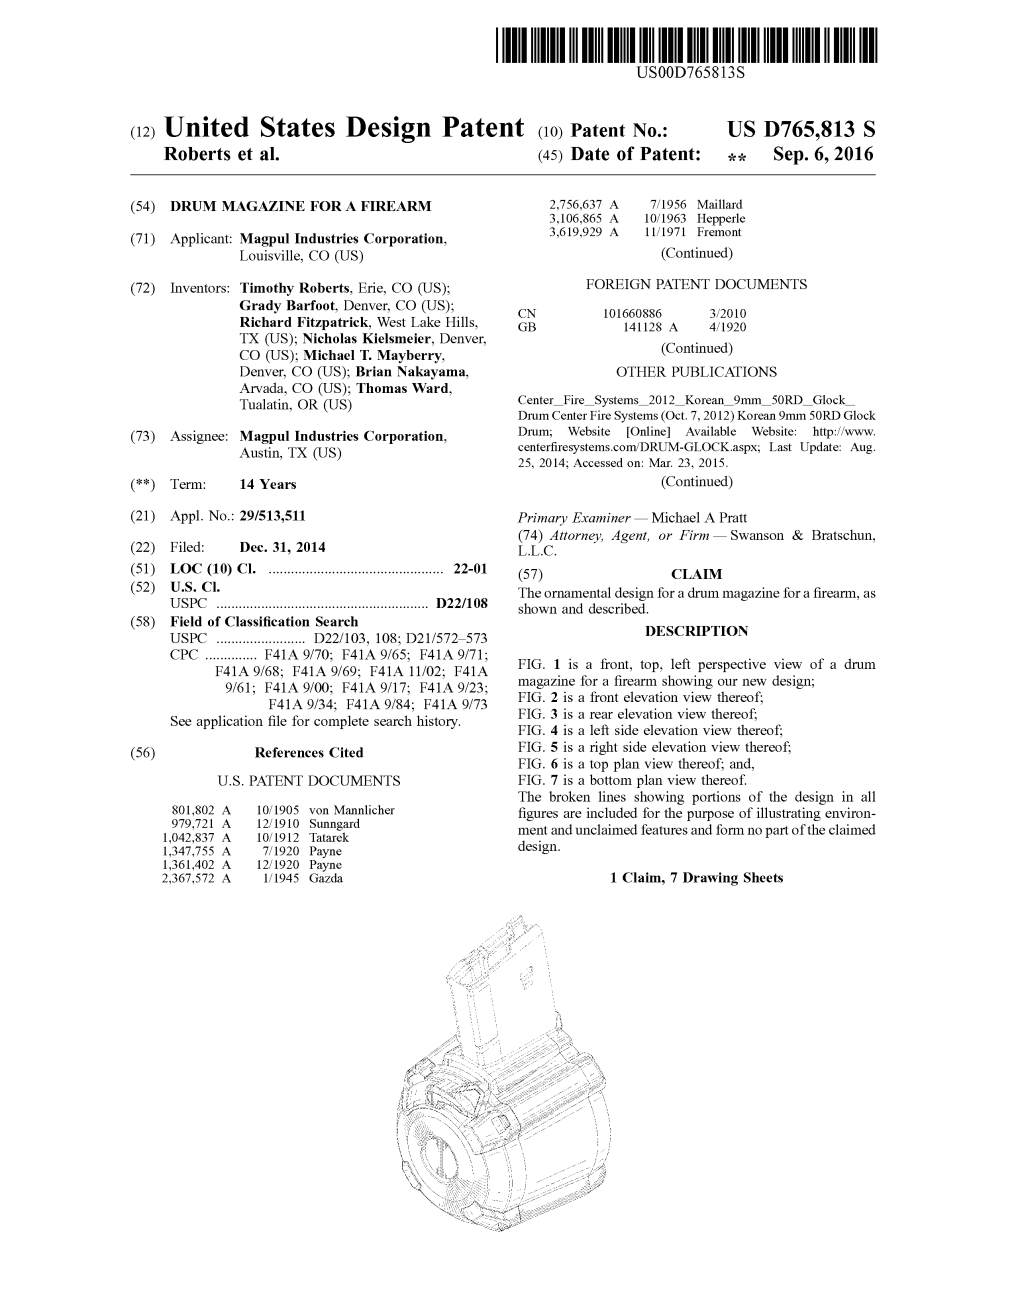 (12) United States Design Patent (10) Patent No.: US D765,813 S Roberts Et Al